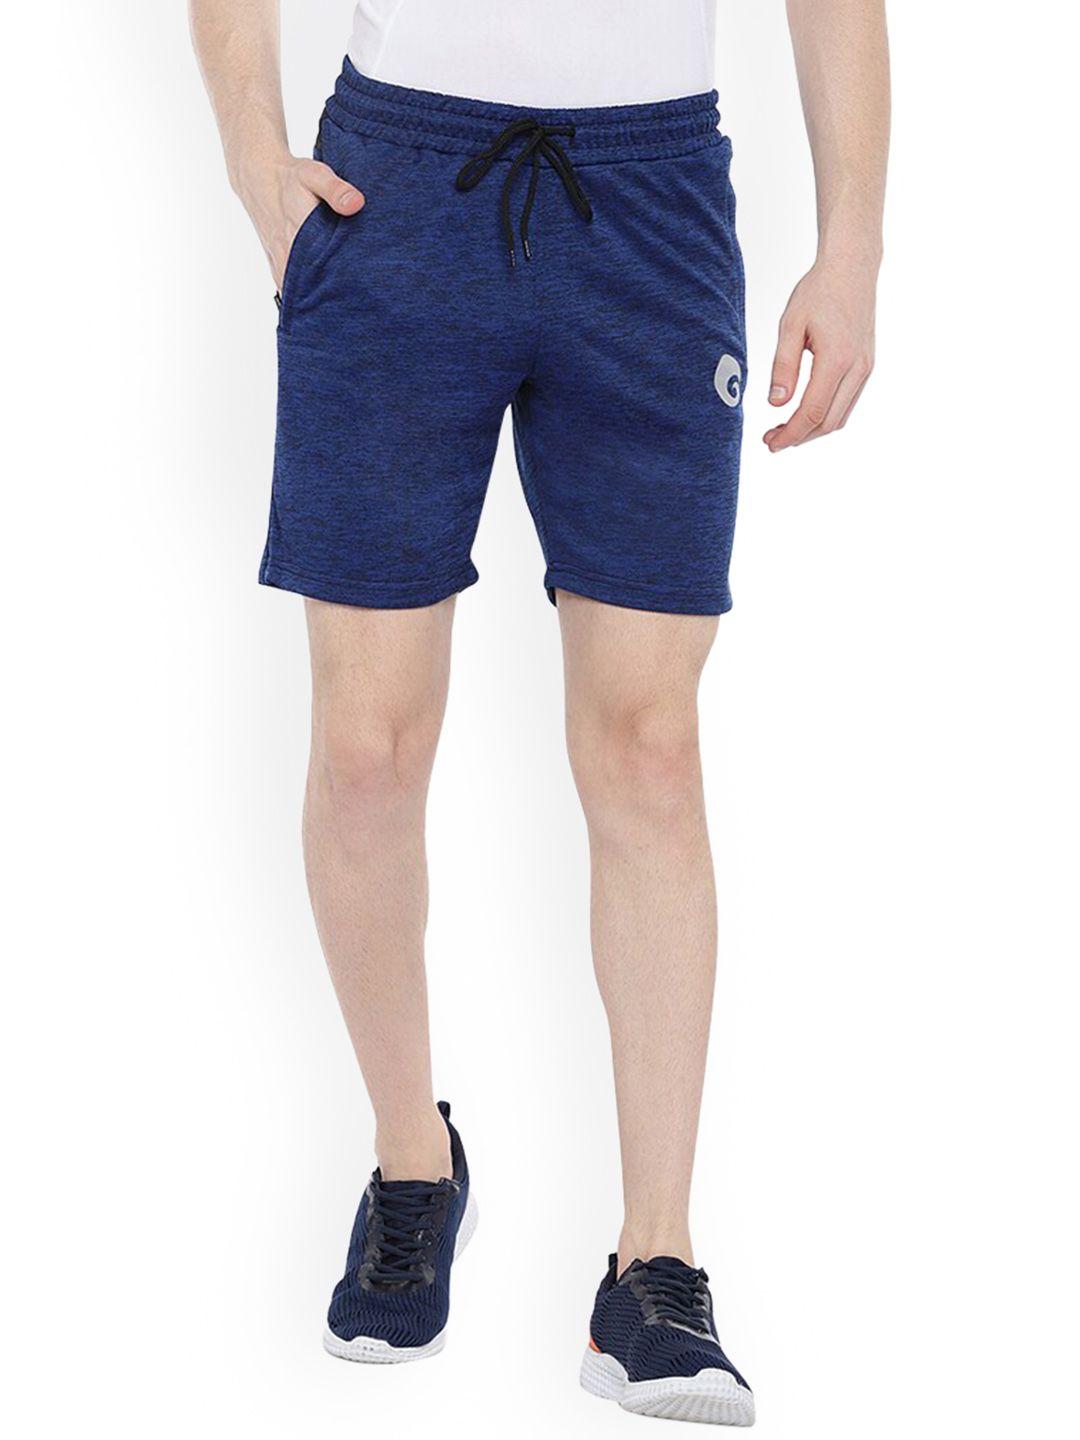 omtex men blue printed training or gym shorts